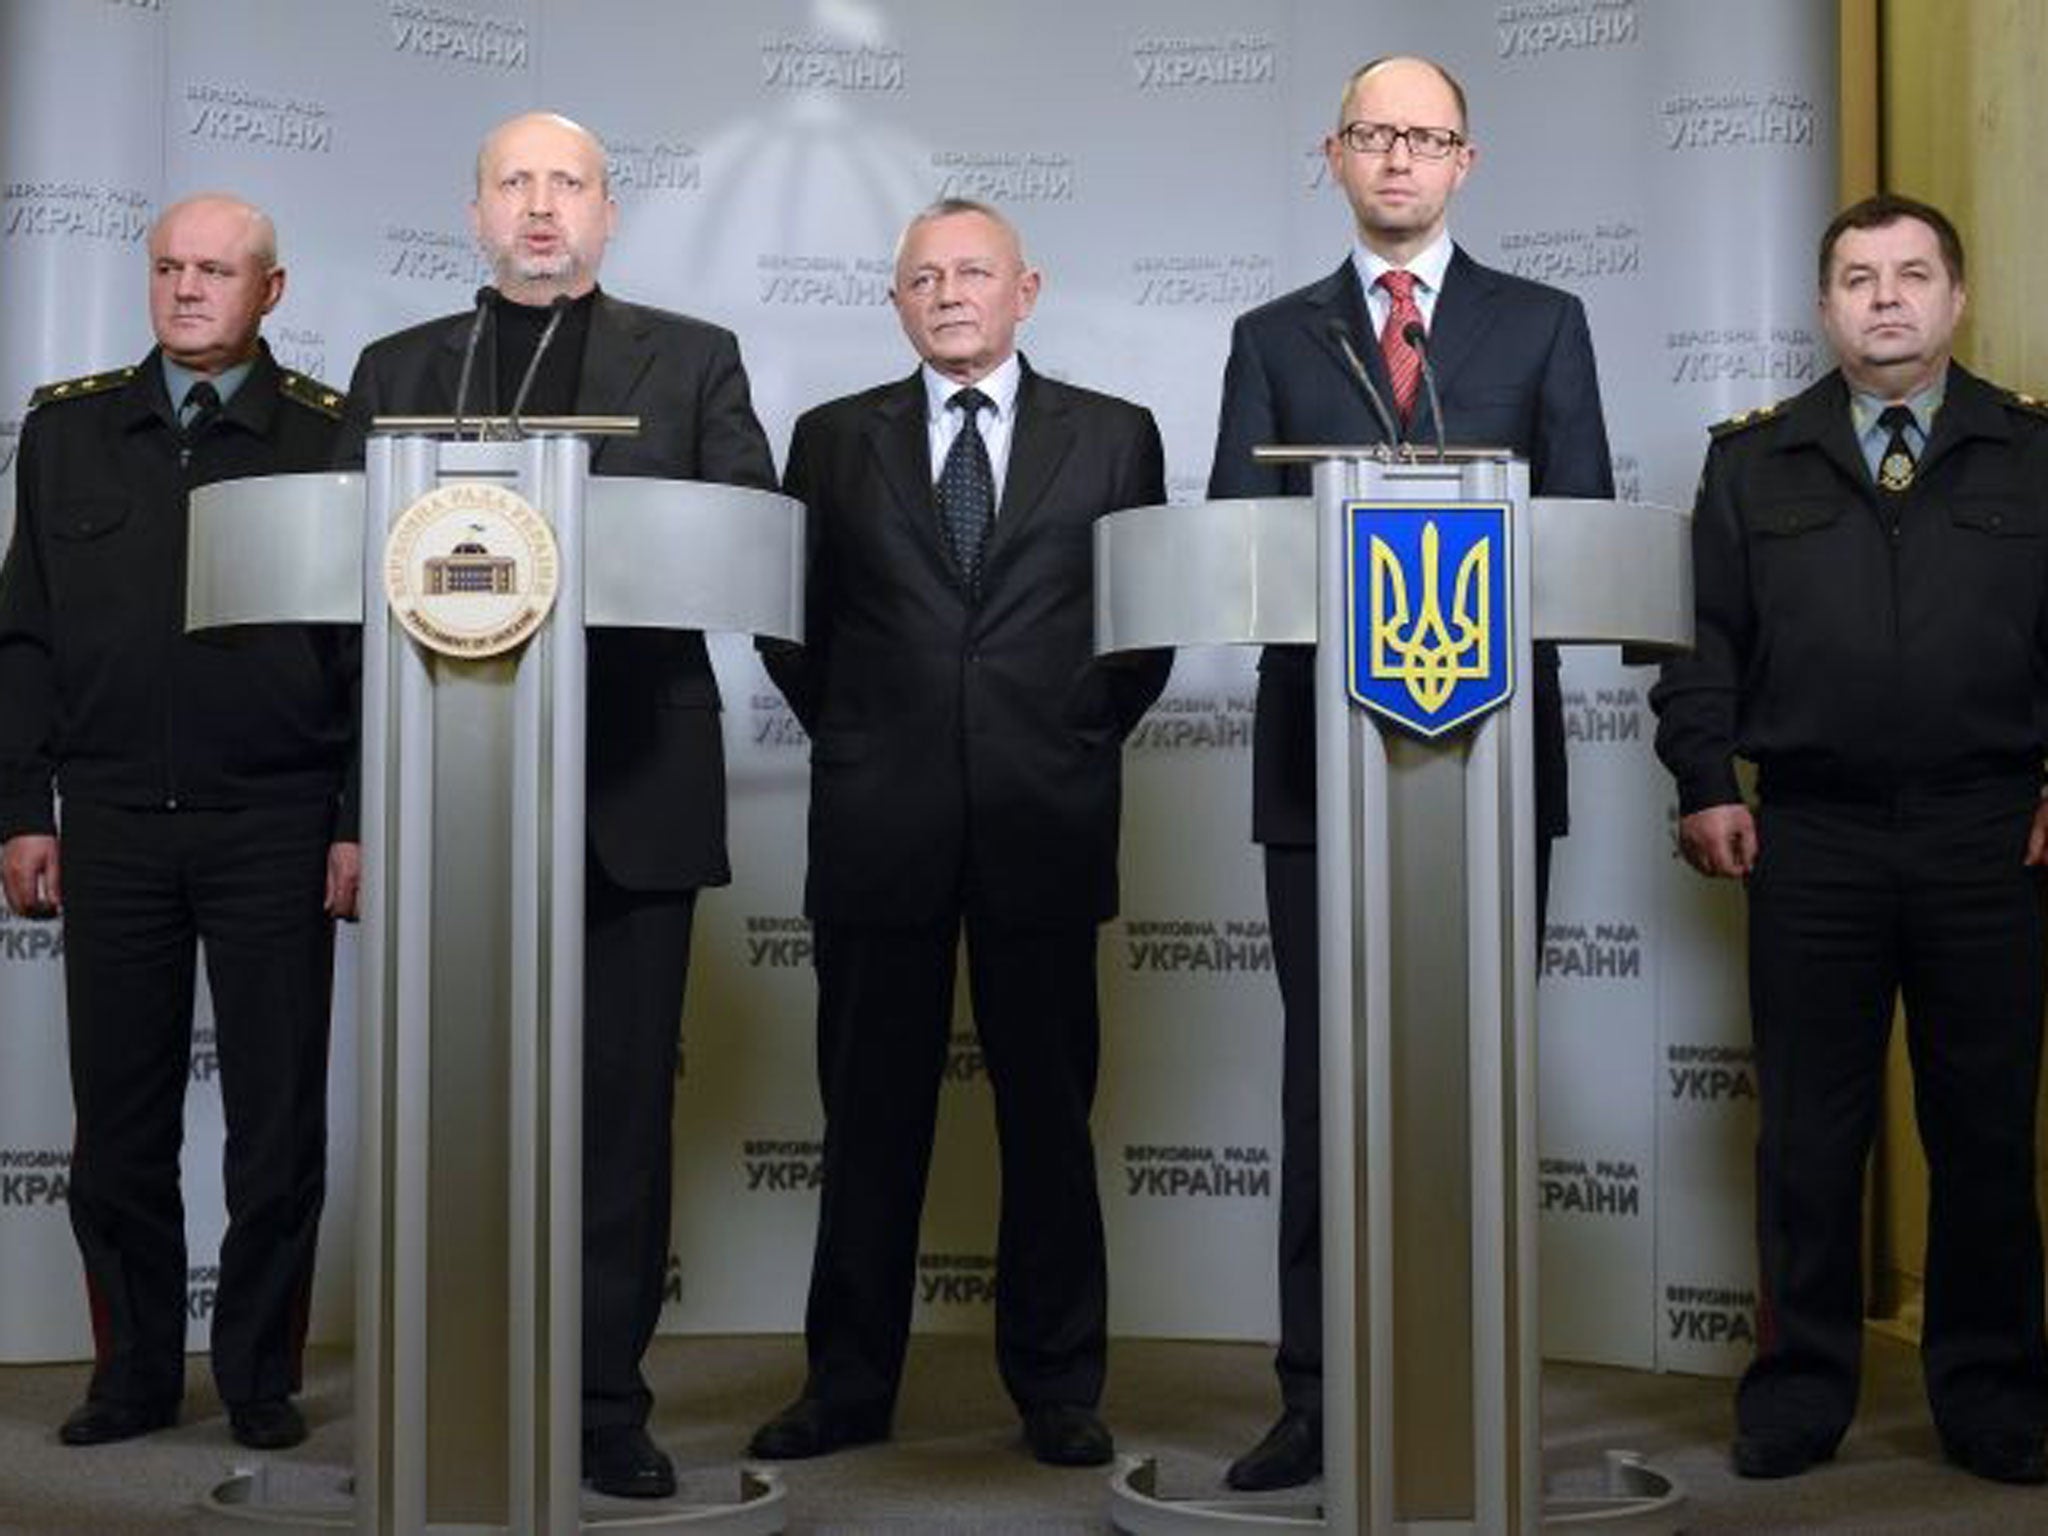 Ukraine's interim President Olexandr Turchynov (second from left)